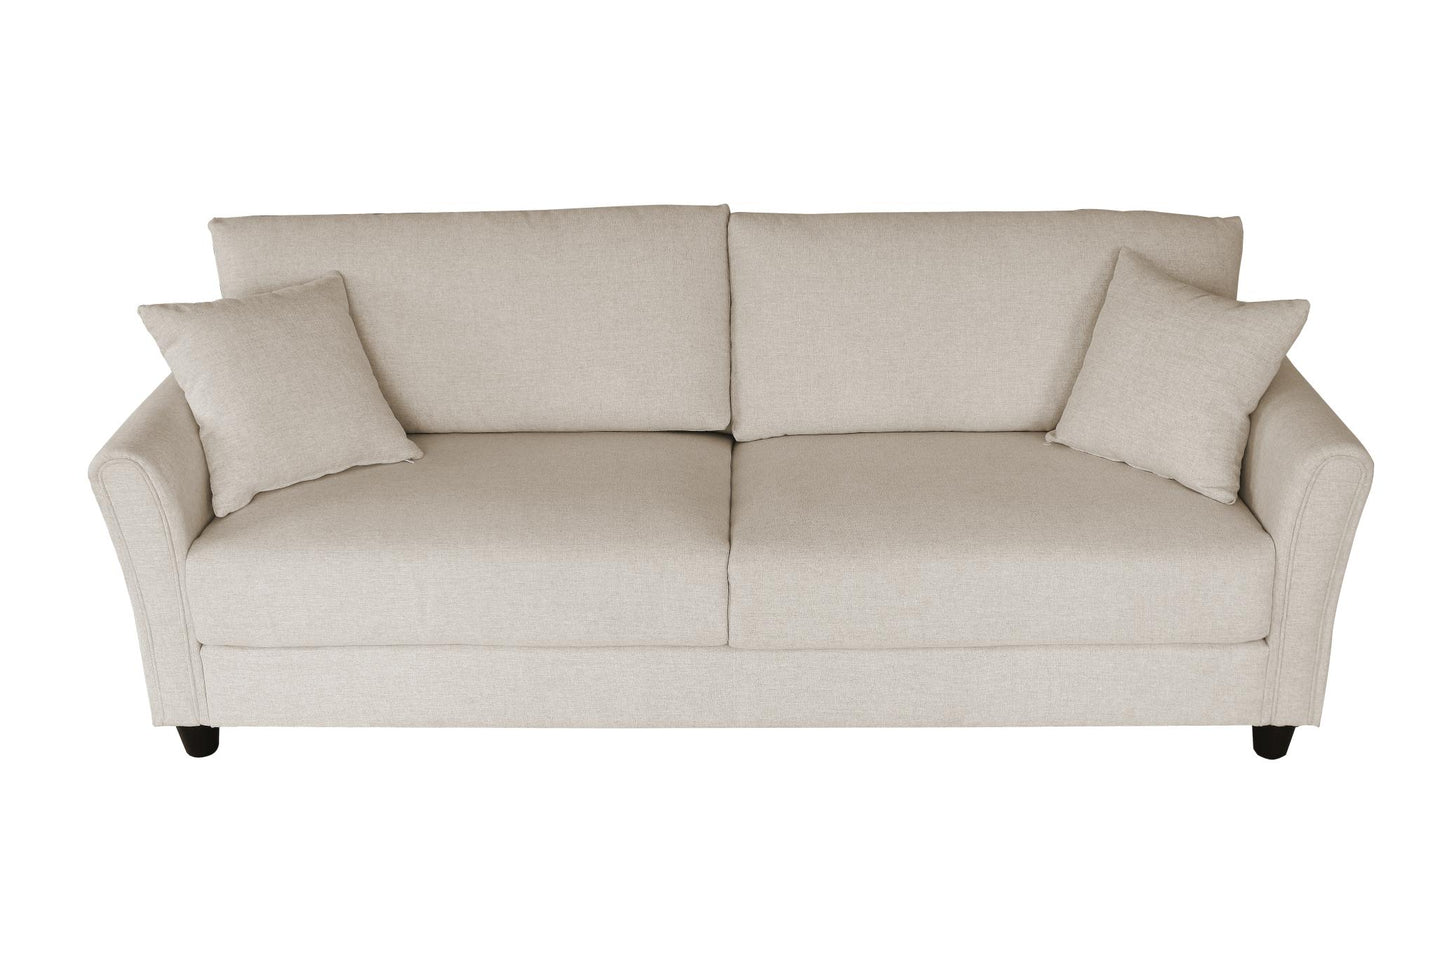 Loveseat Sofa Beige Linen with 2 Pillows